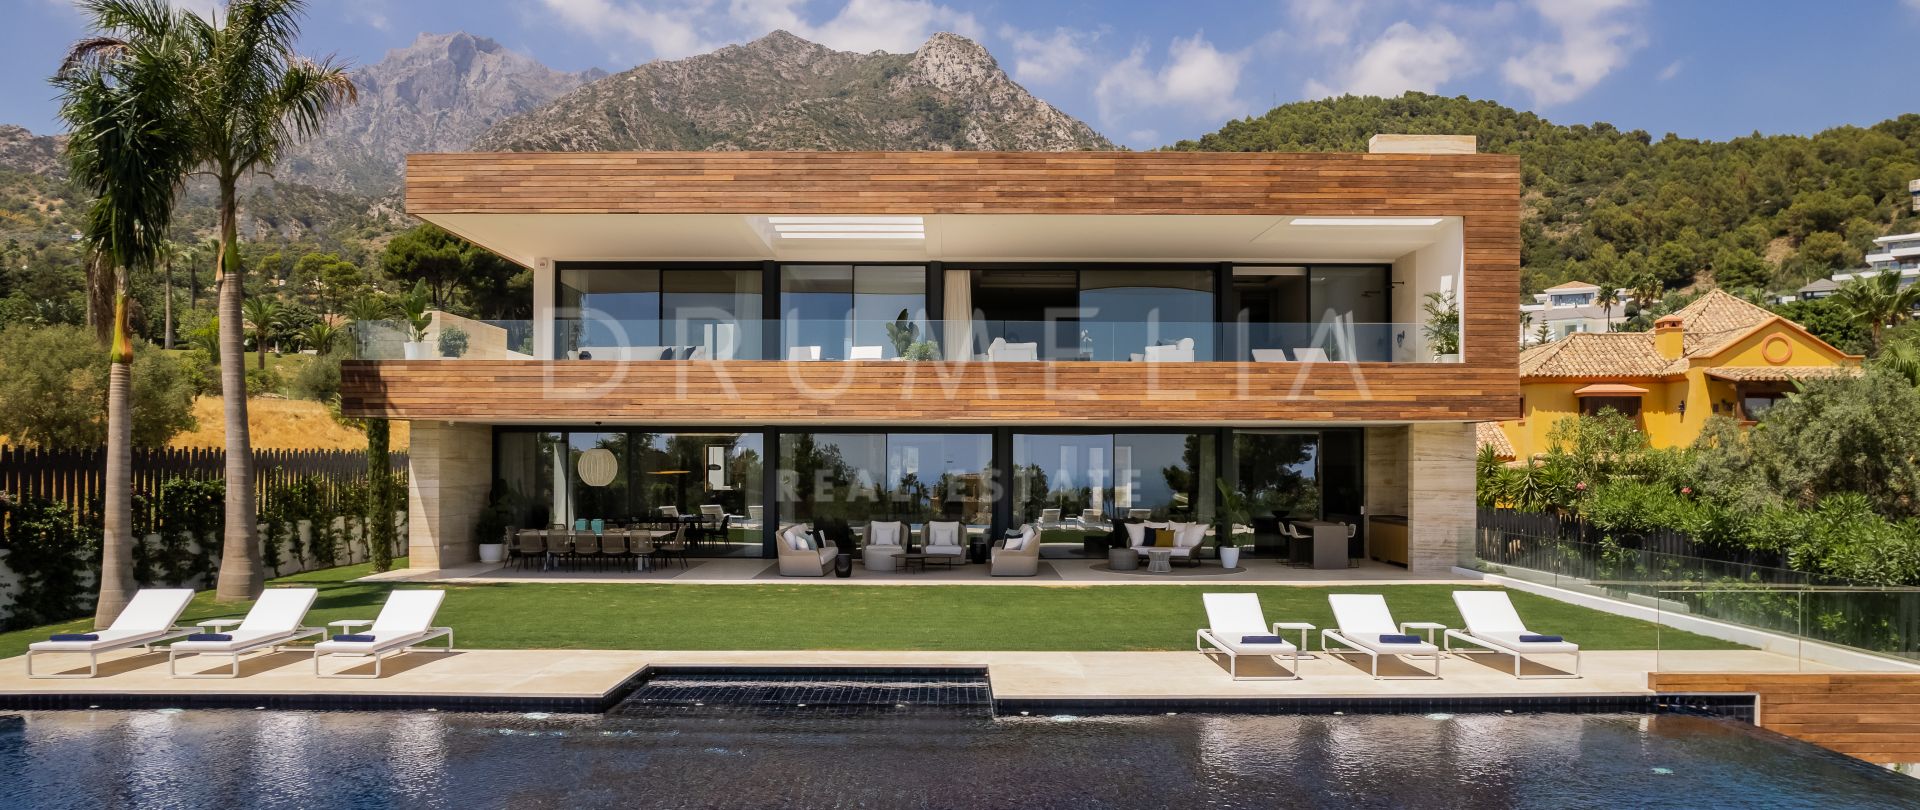 Large brand new villa with stunning views in Cascada de Camoján Marbella's Golden Mile.